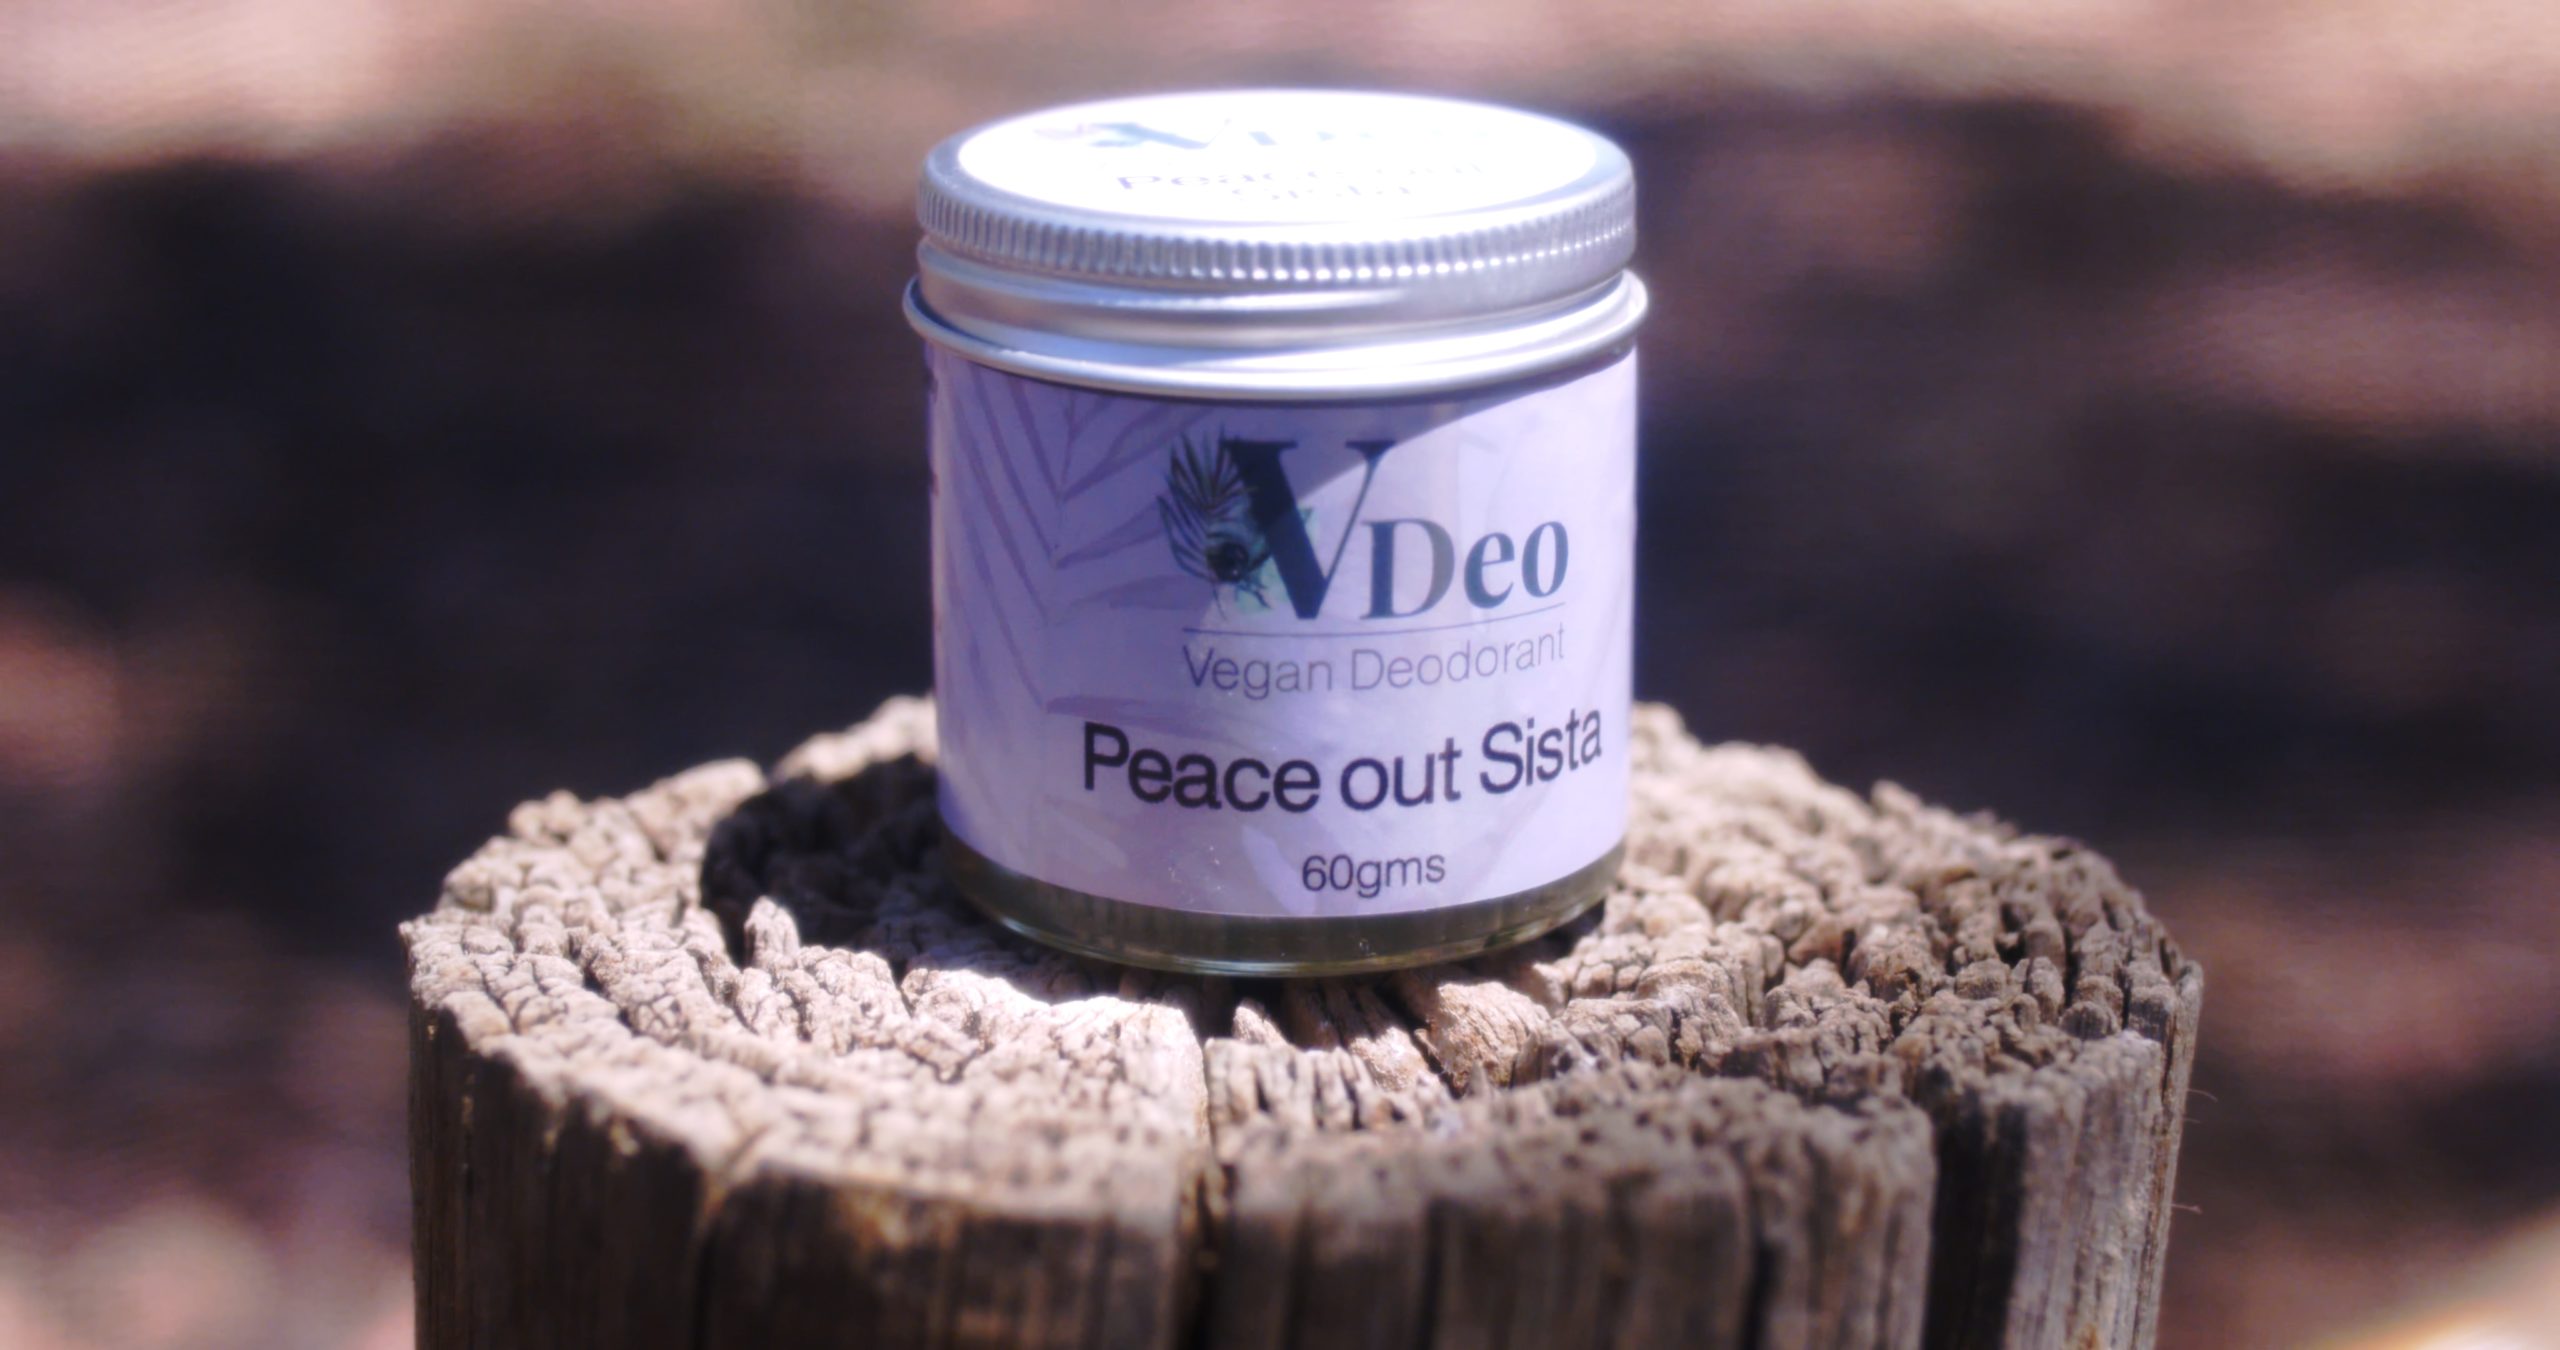 VDeo Vegan Deodorant Peace Out Sista 60g